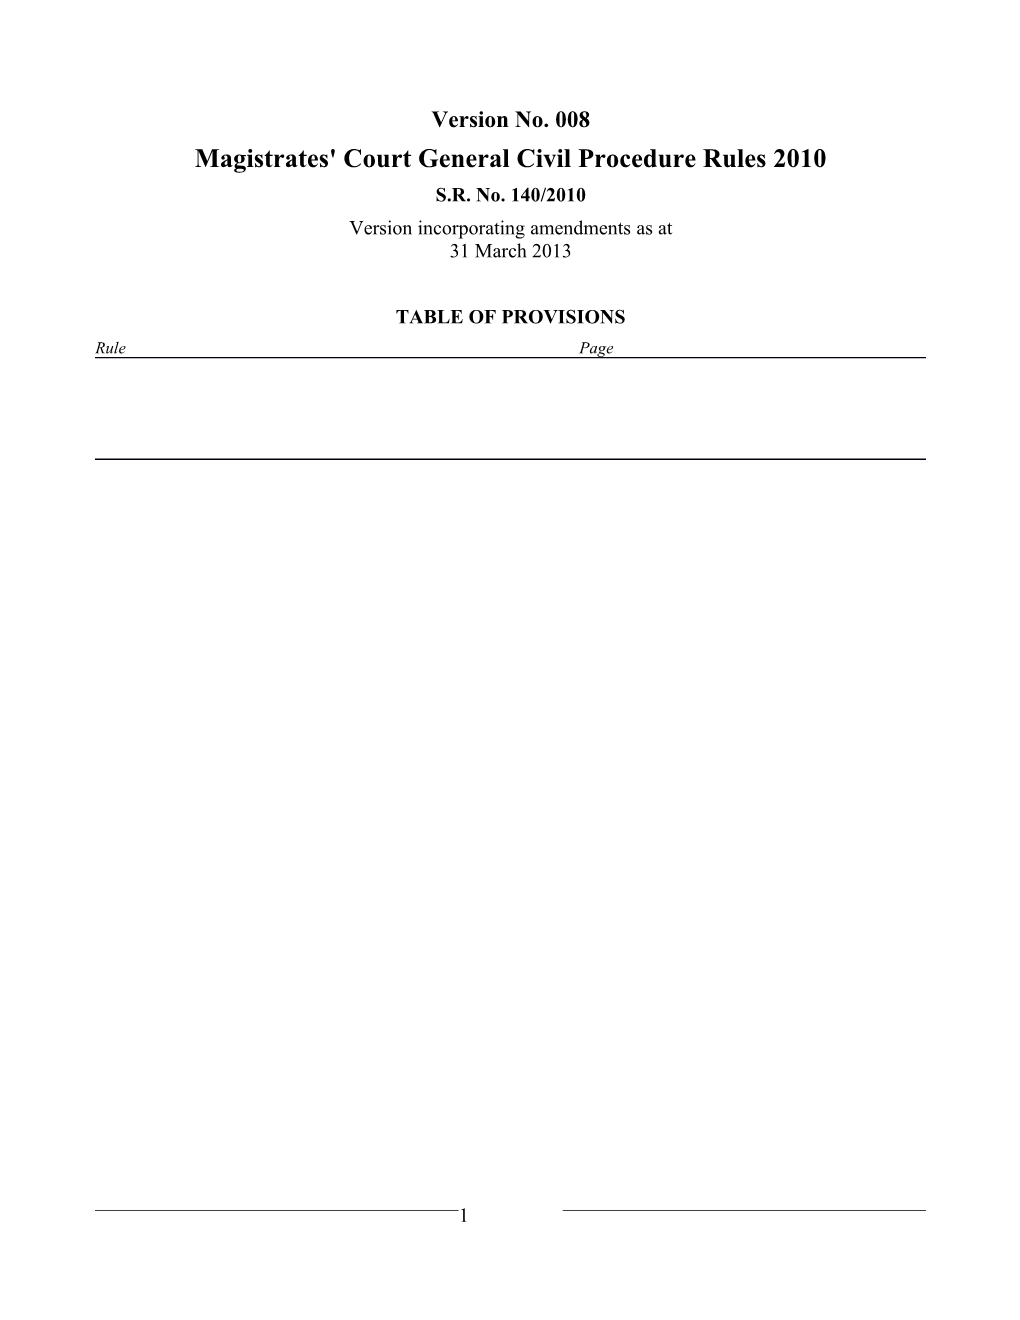 Magistrates' Court General Civil Procedure Rules 2010